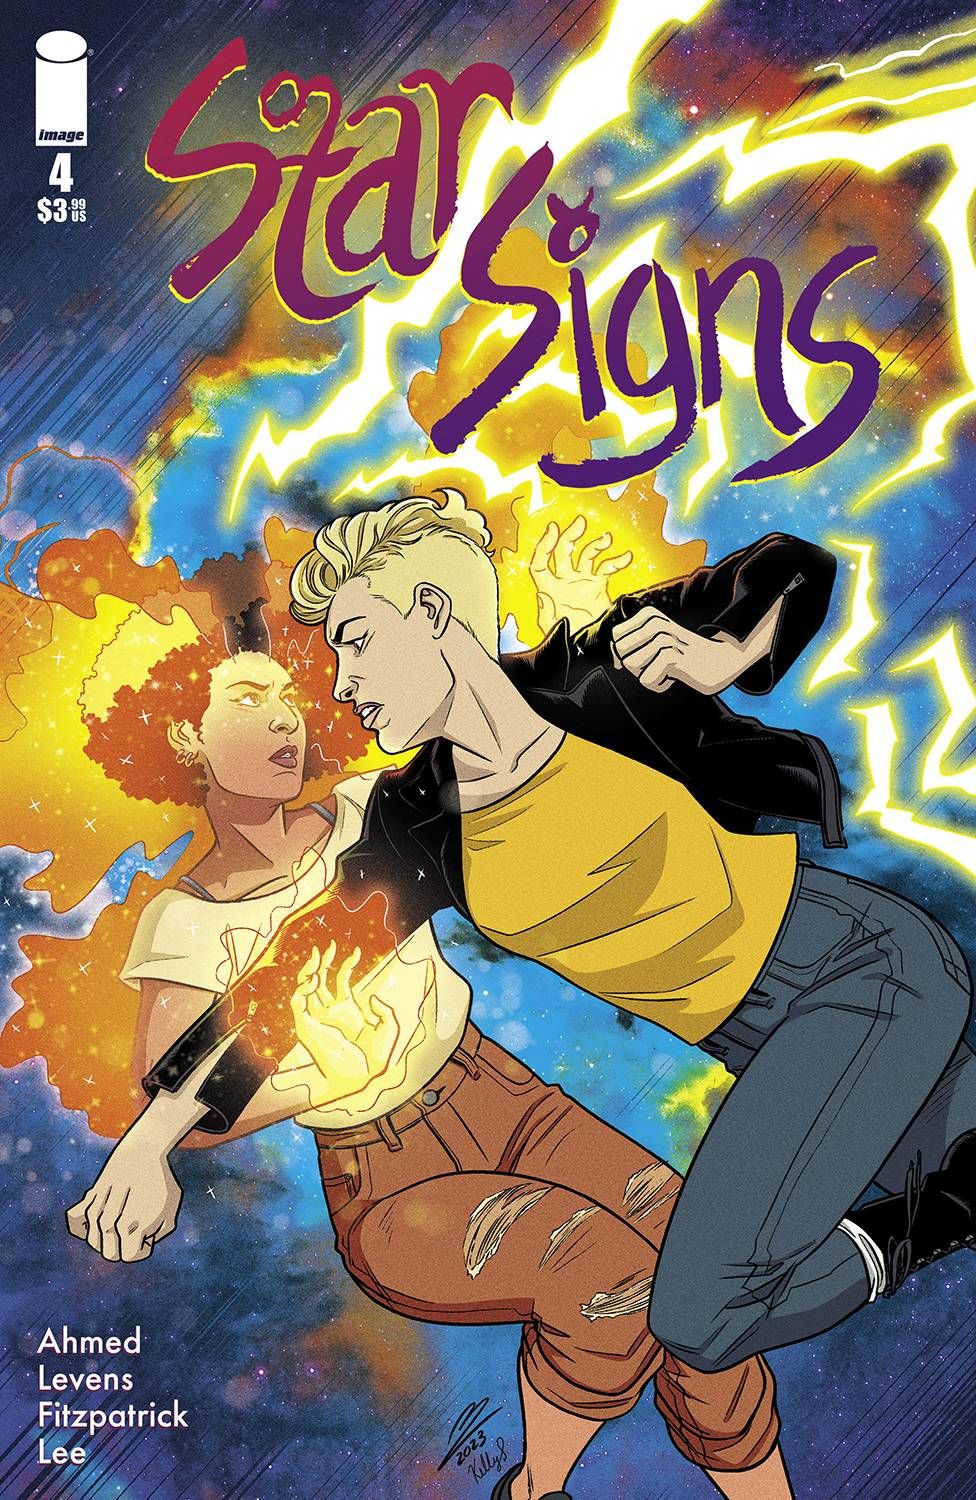 Starsigns #4 Comic